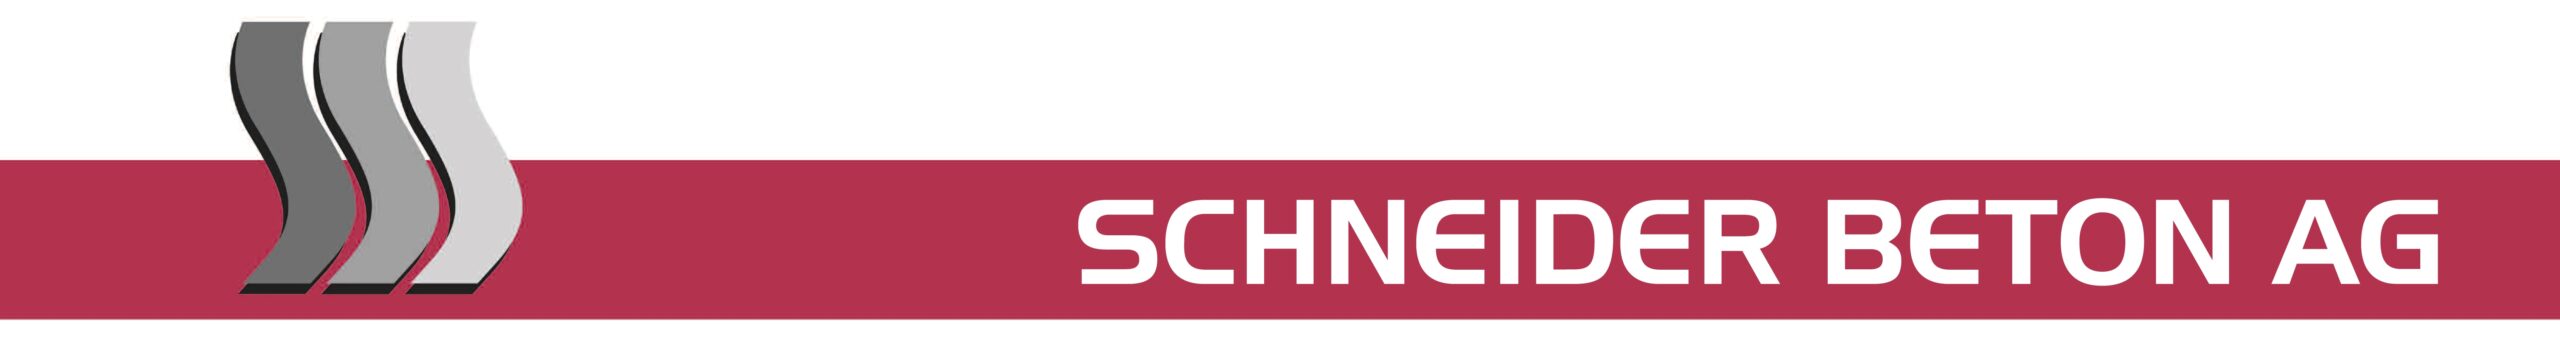 Schneider Beton AG